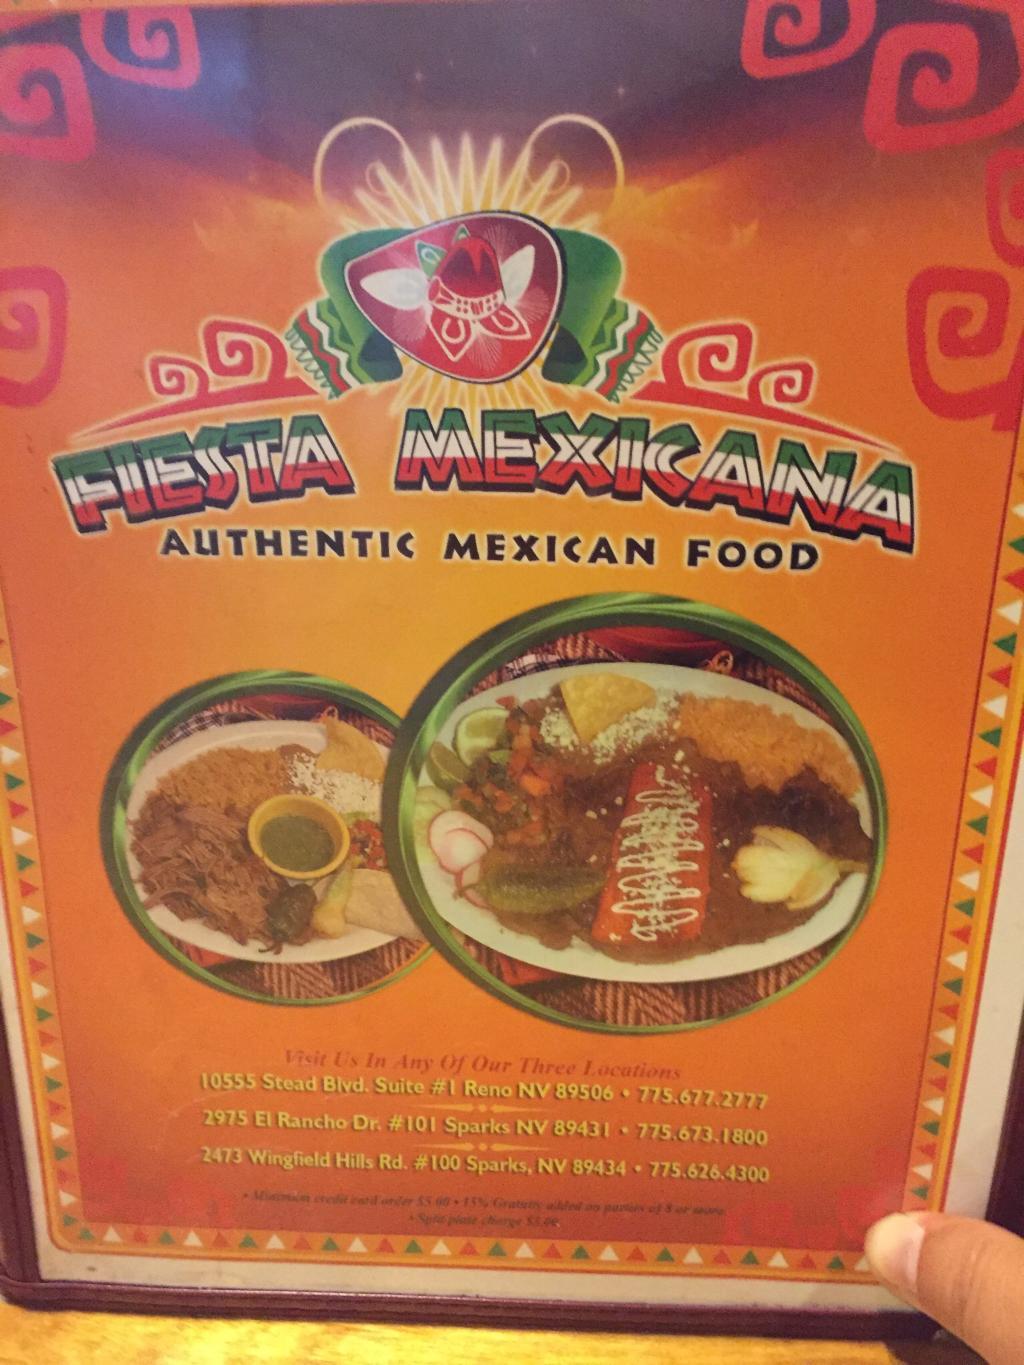 La Fiesta Mexicana